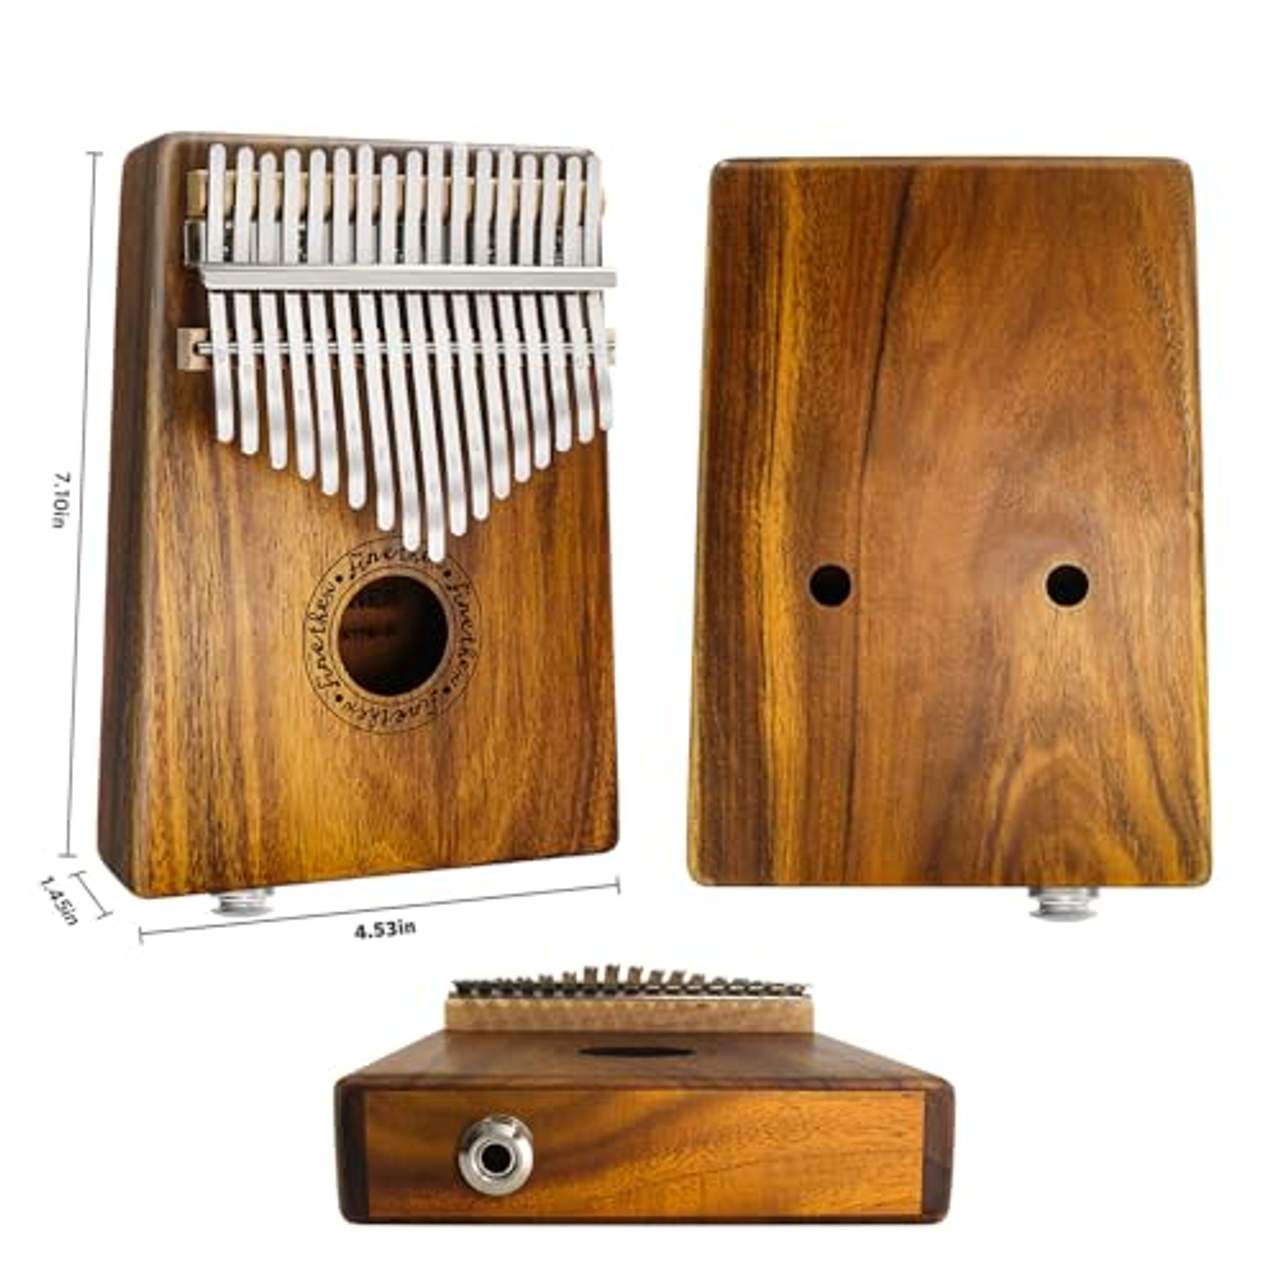 Elektrische Kalimba Instrument 17 Schlüssel Daumenklavier Koa Wood Body